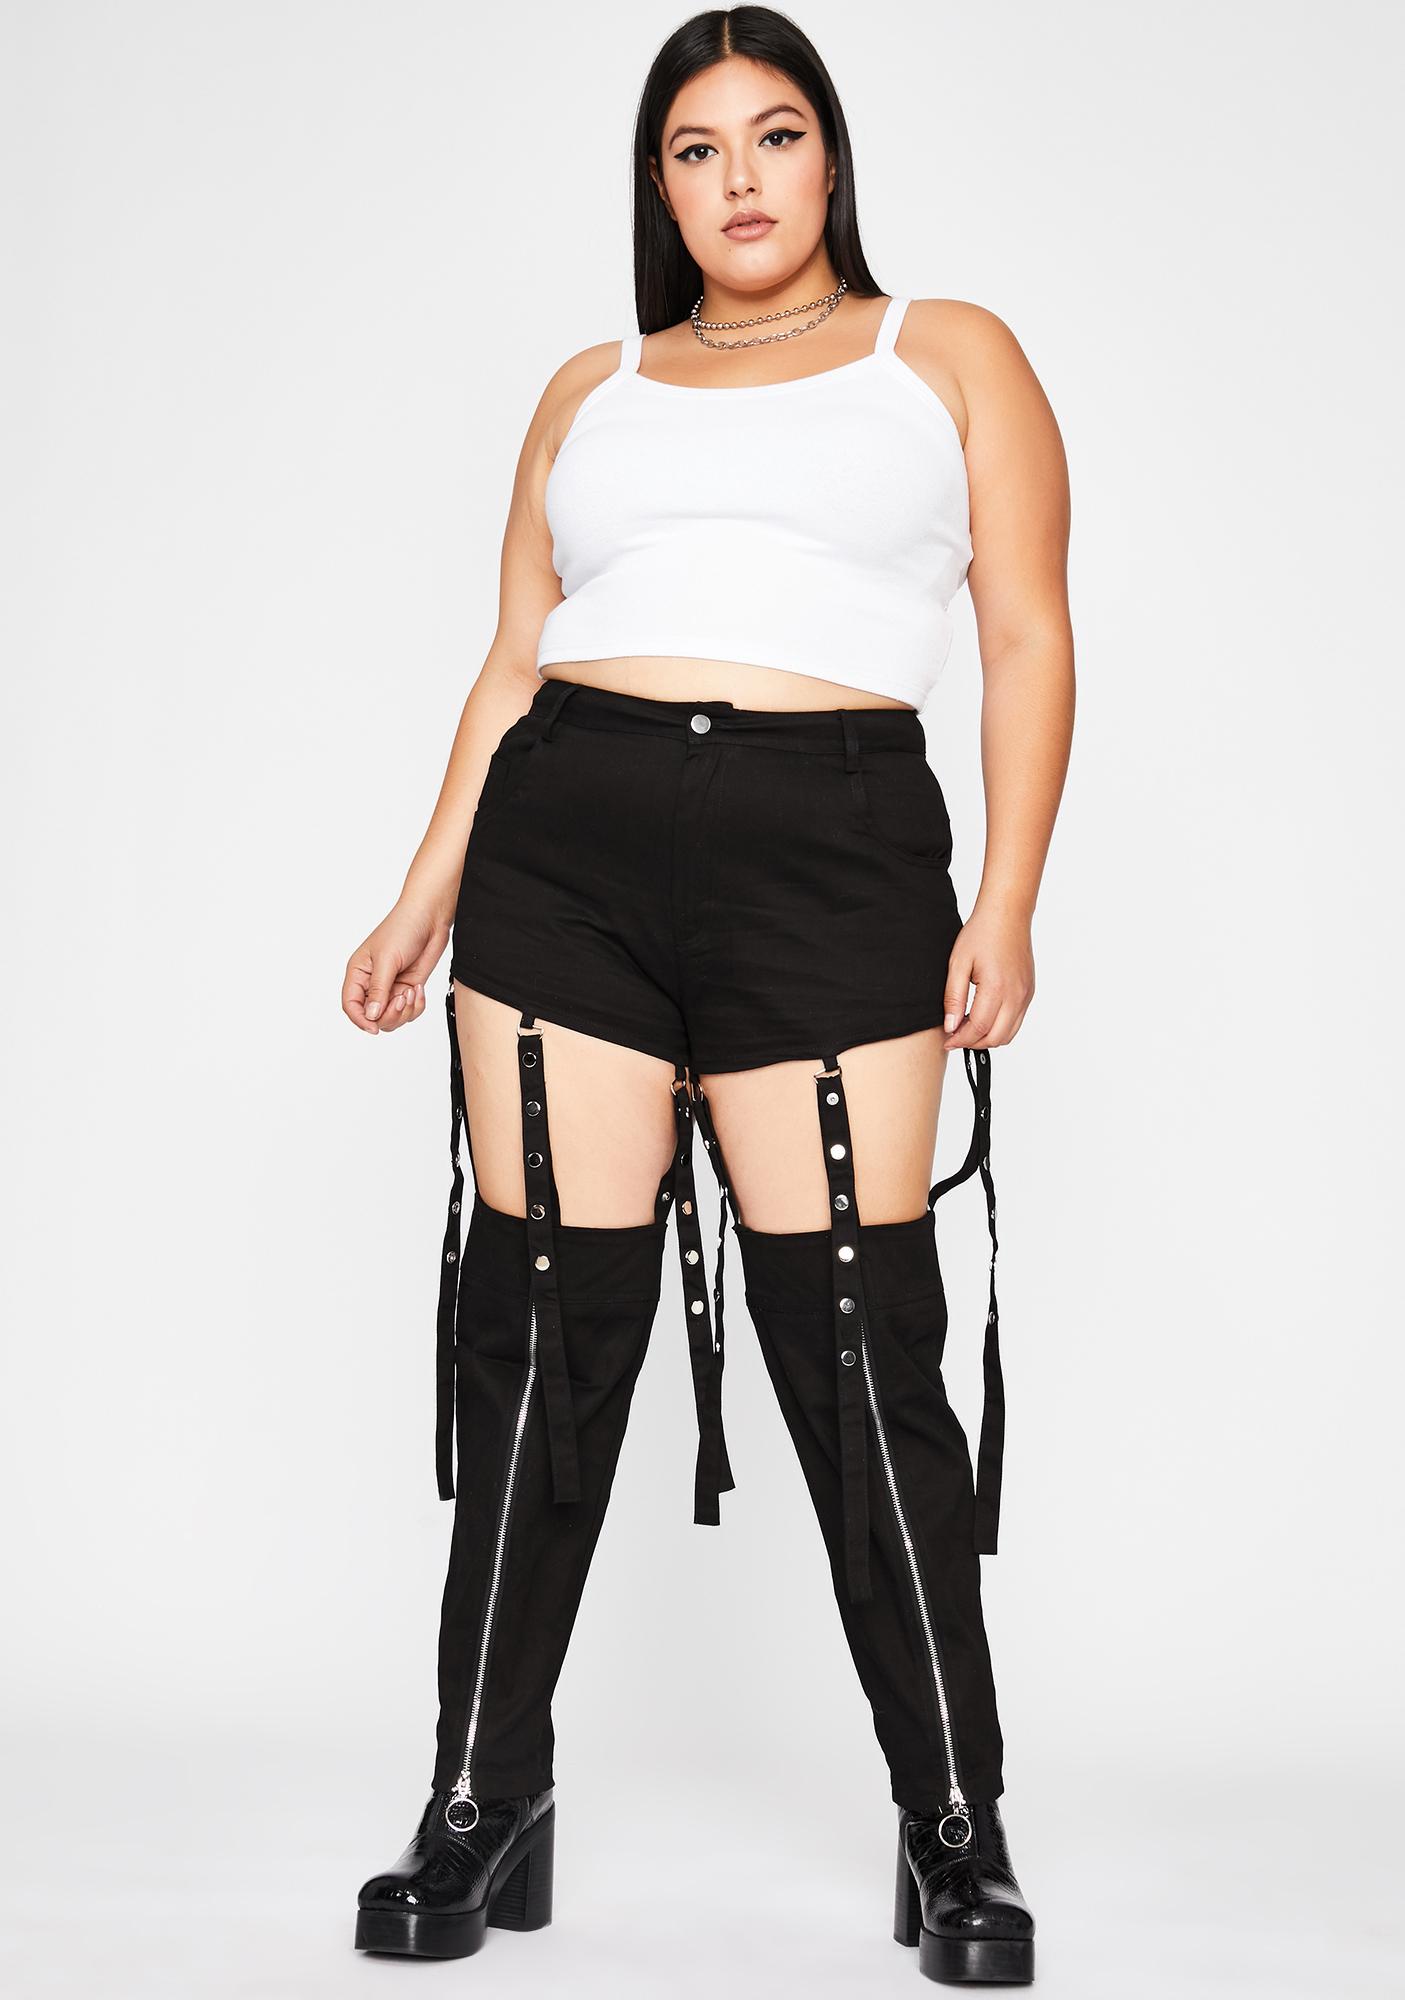 Plus Size Chap Style Skinny Strappy O-Ring Zip Pants Black | Dolls Kill